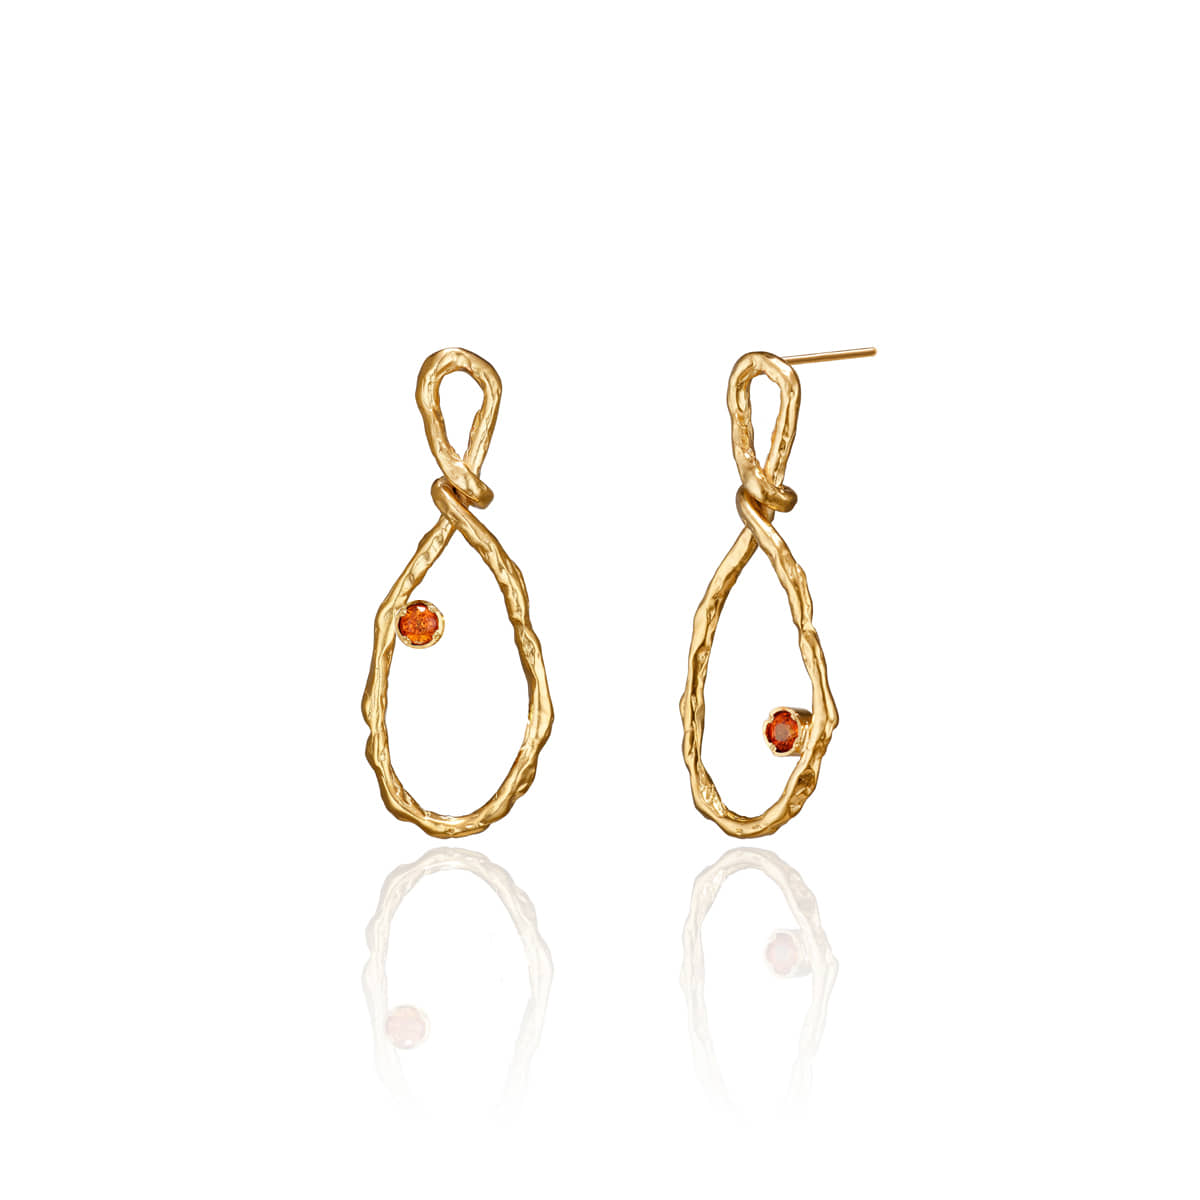 Twisted sapphire earrings